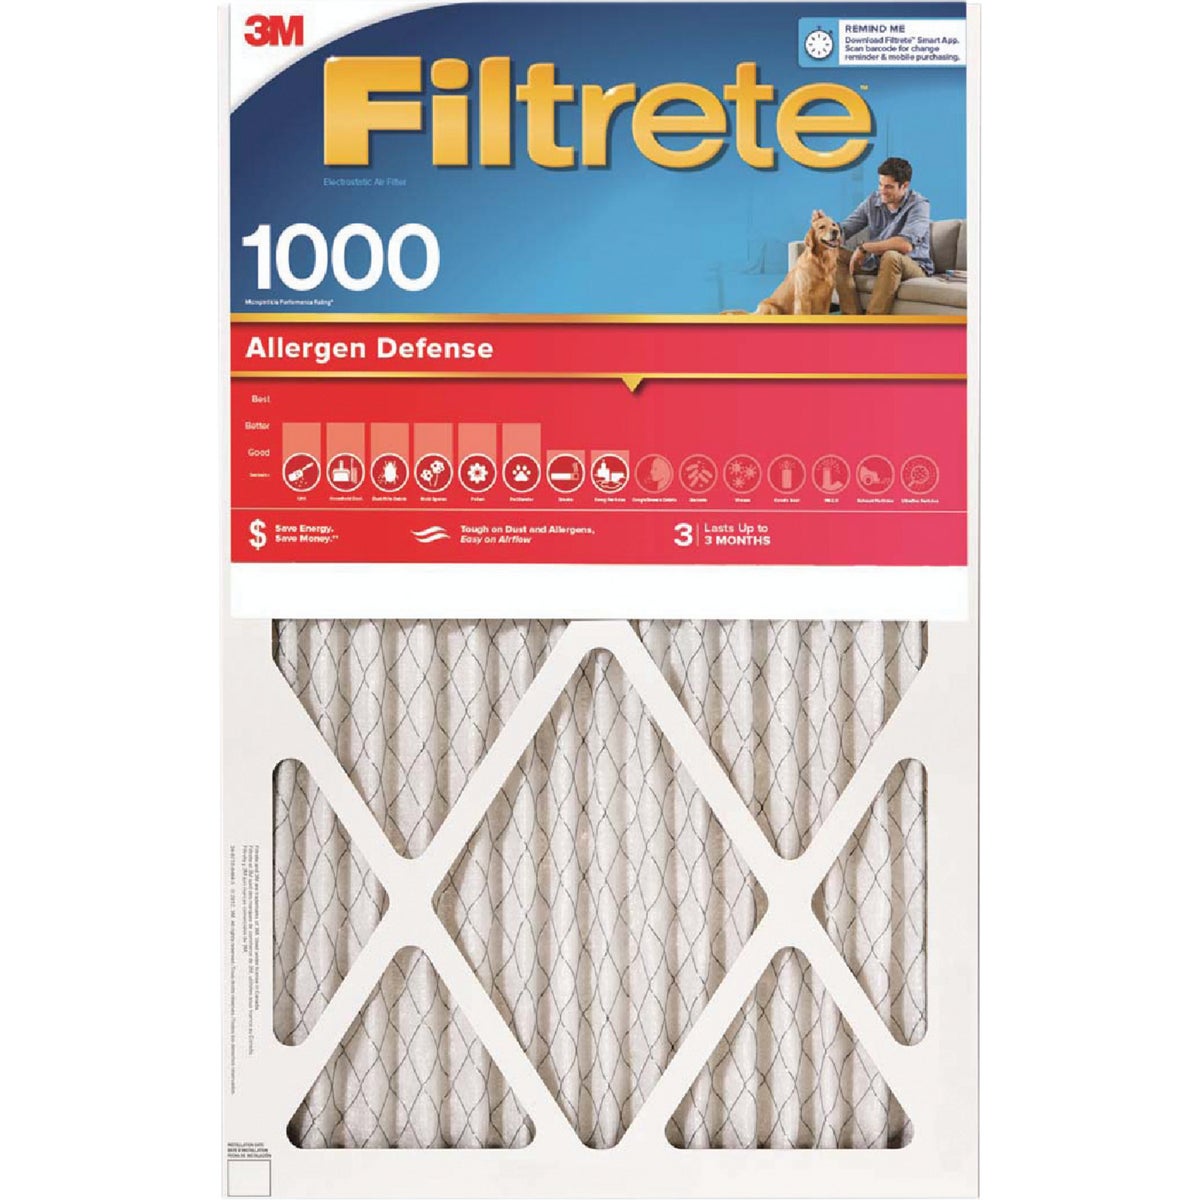 Filtrete 14 In. x 20 In. x 1 In. Allergen Defense 1000/1085 MPR Furnace Filter